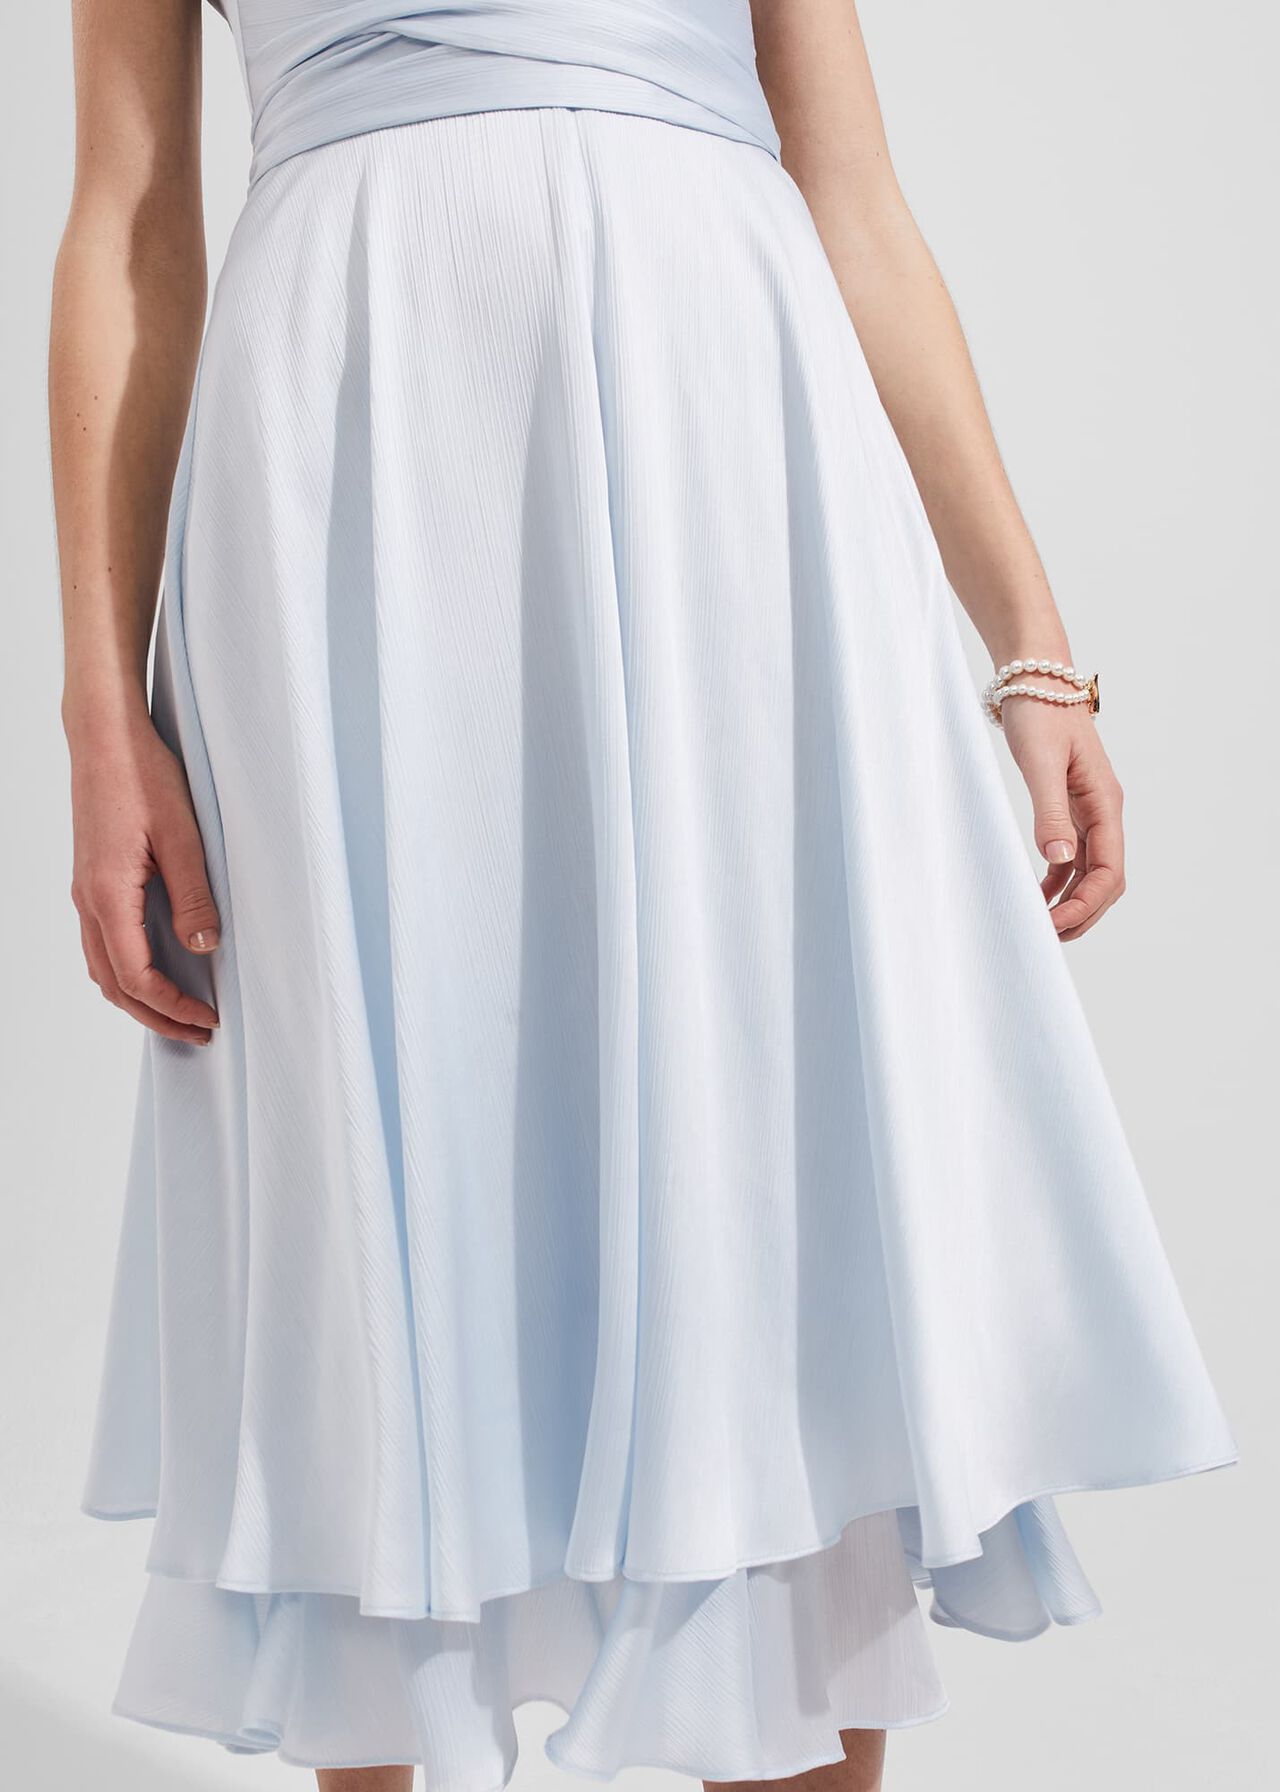 Viola Satin Fit And Flare Dress, Pale Blue, hi-res